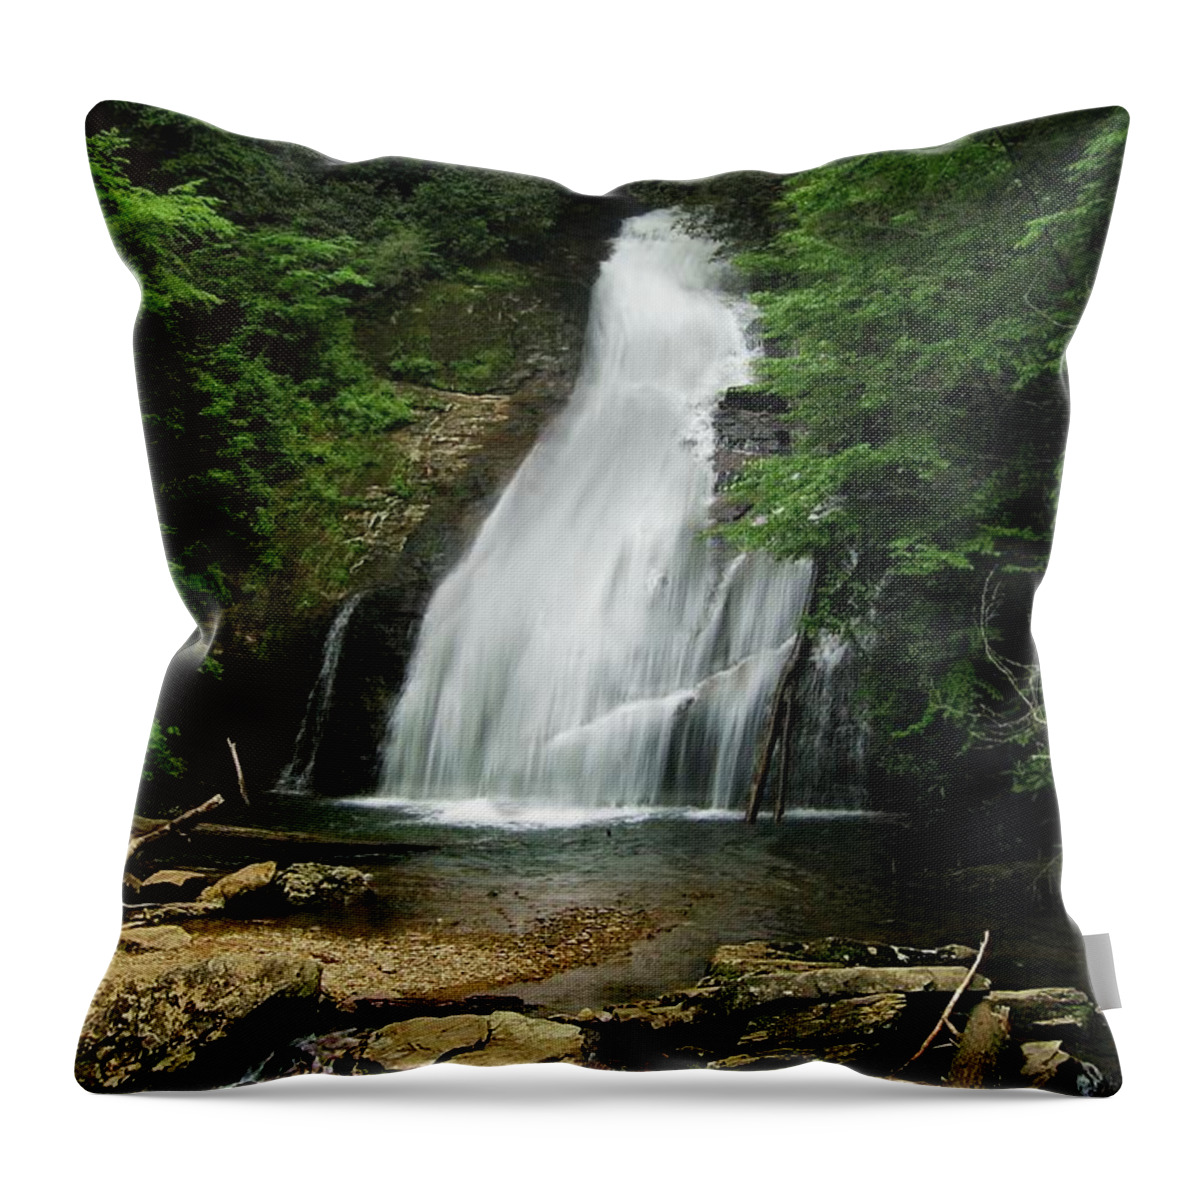 Helton Creek Falls Throw Pillow featuring the photograph Upper Helton Creek Falls by Joe Duket